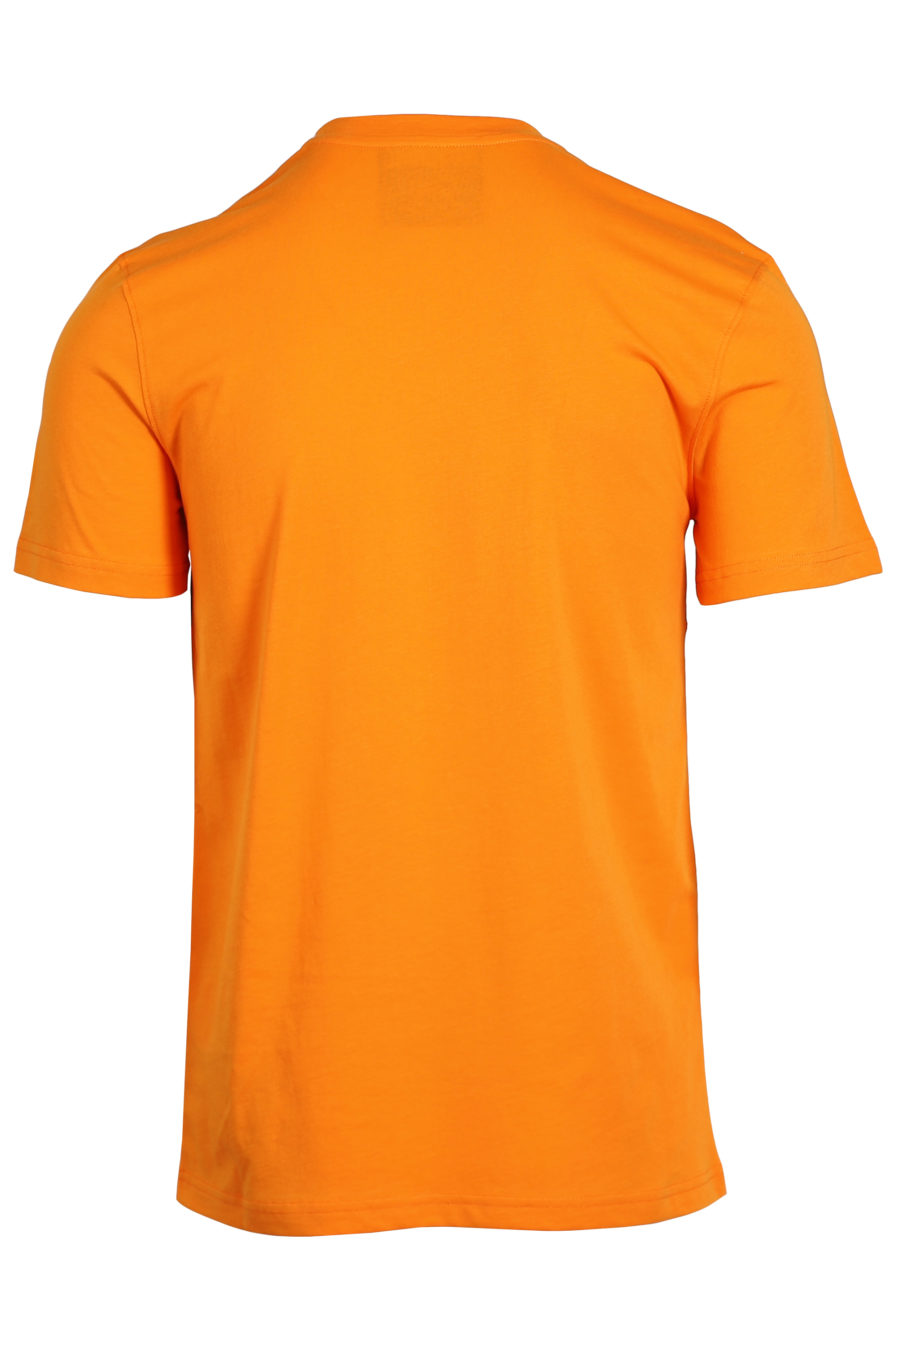 T-shirt orange logo noir et blanc - IMG 0980